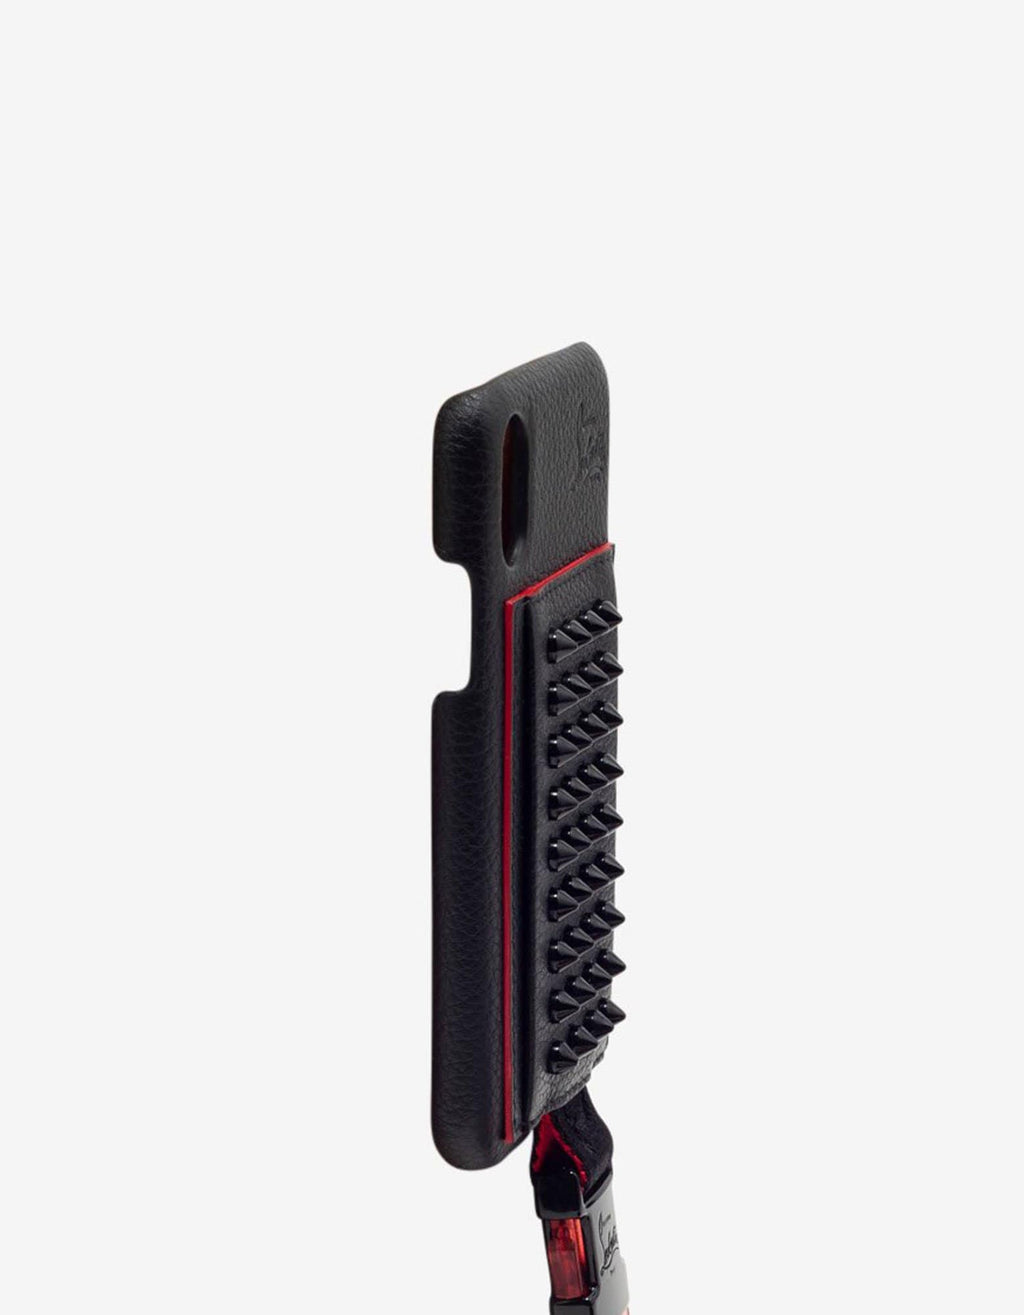 Christian Louboutin Loubiphone Kios iPhone X/XS Case with Strap